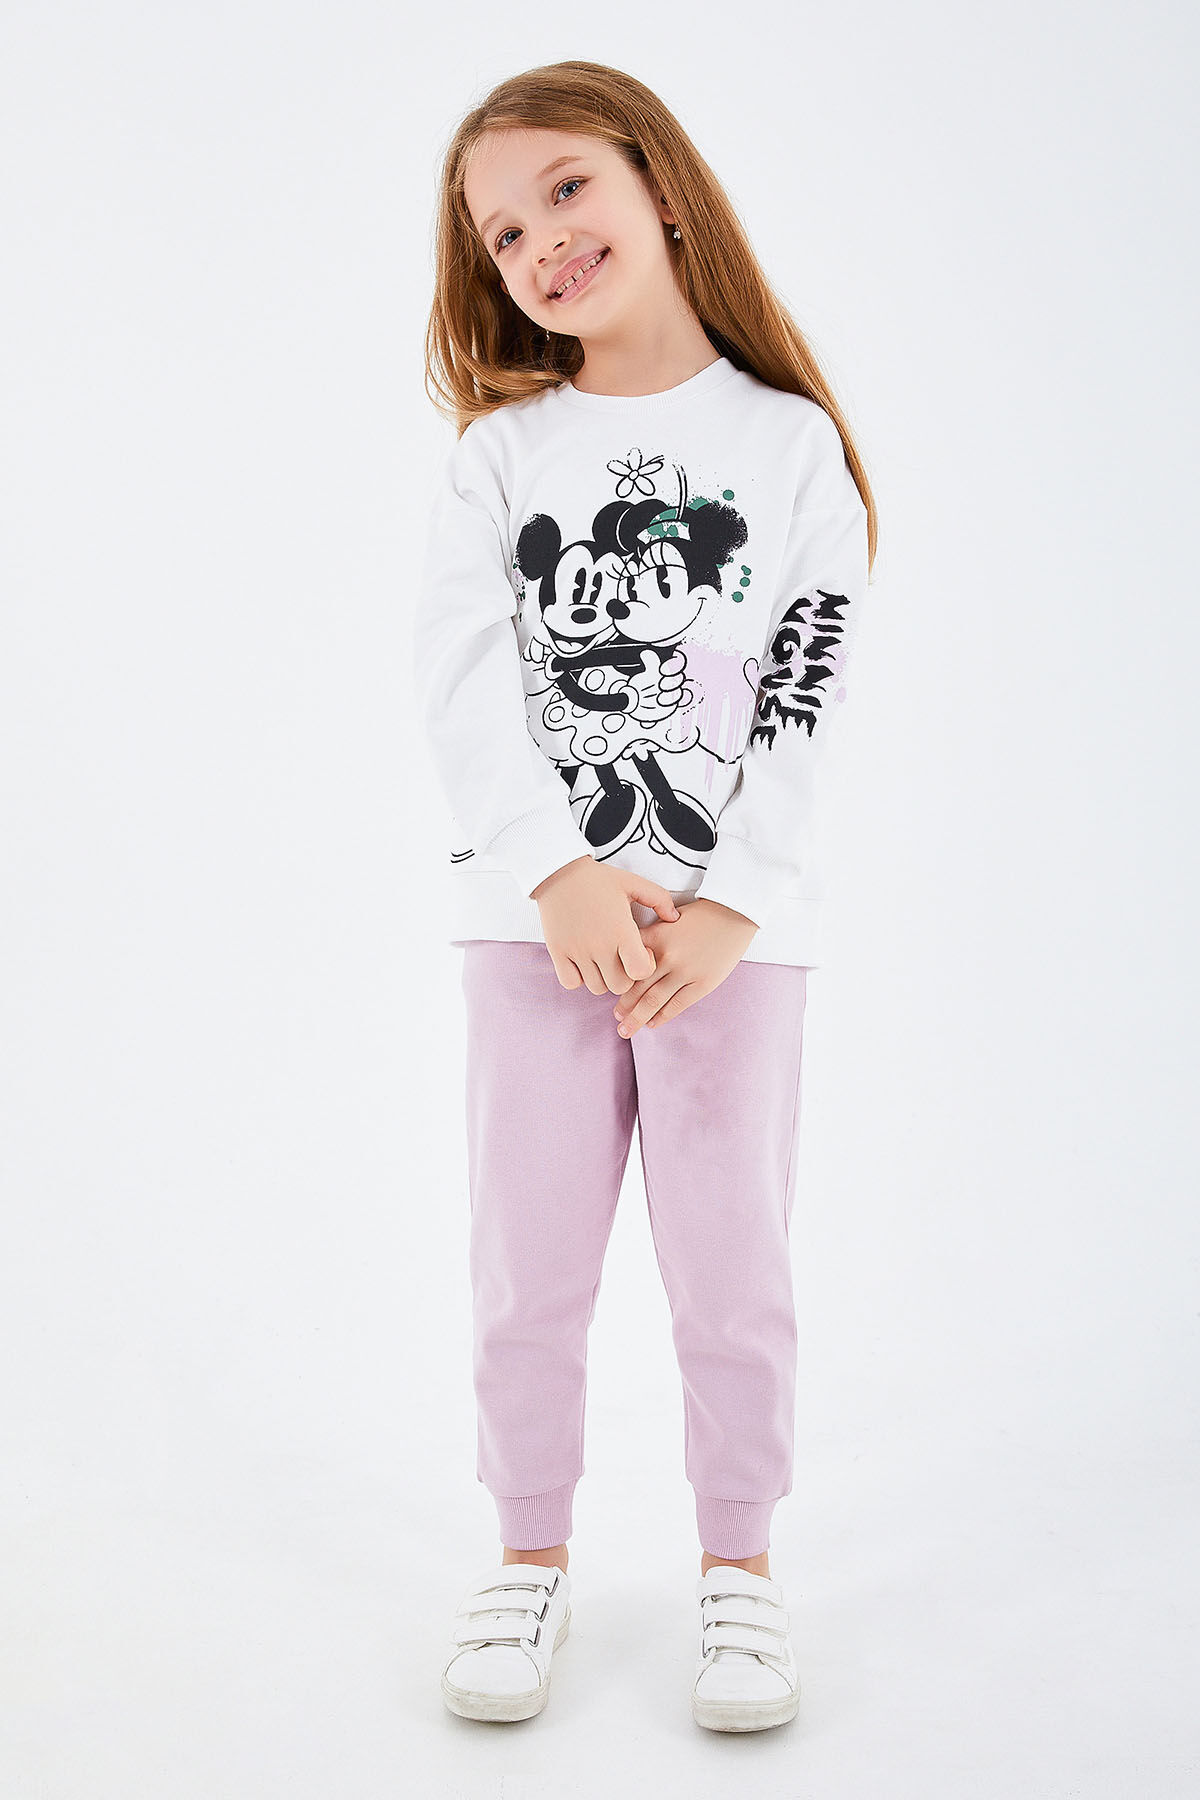 Minnie Mouse - Minnie Mouse Lisanslı Krem Kız Çocuk Eşofman Takım